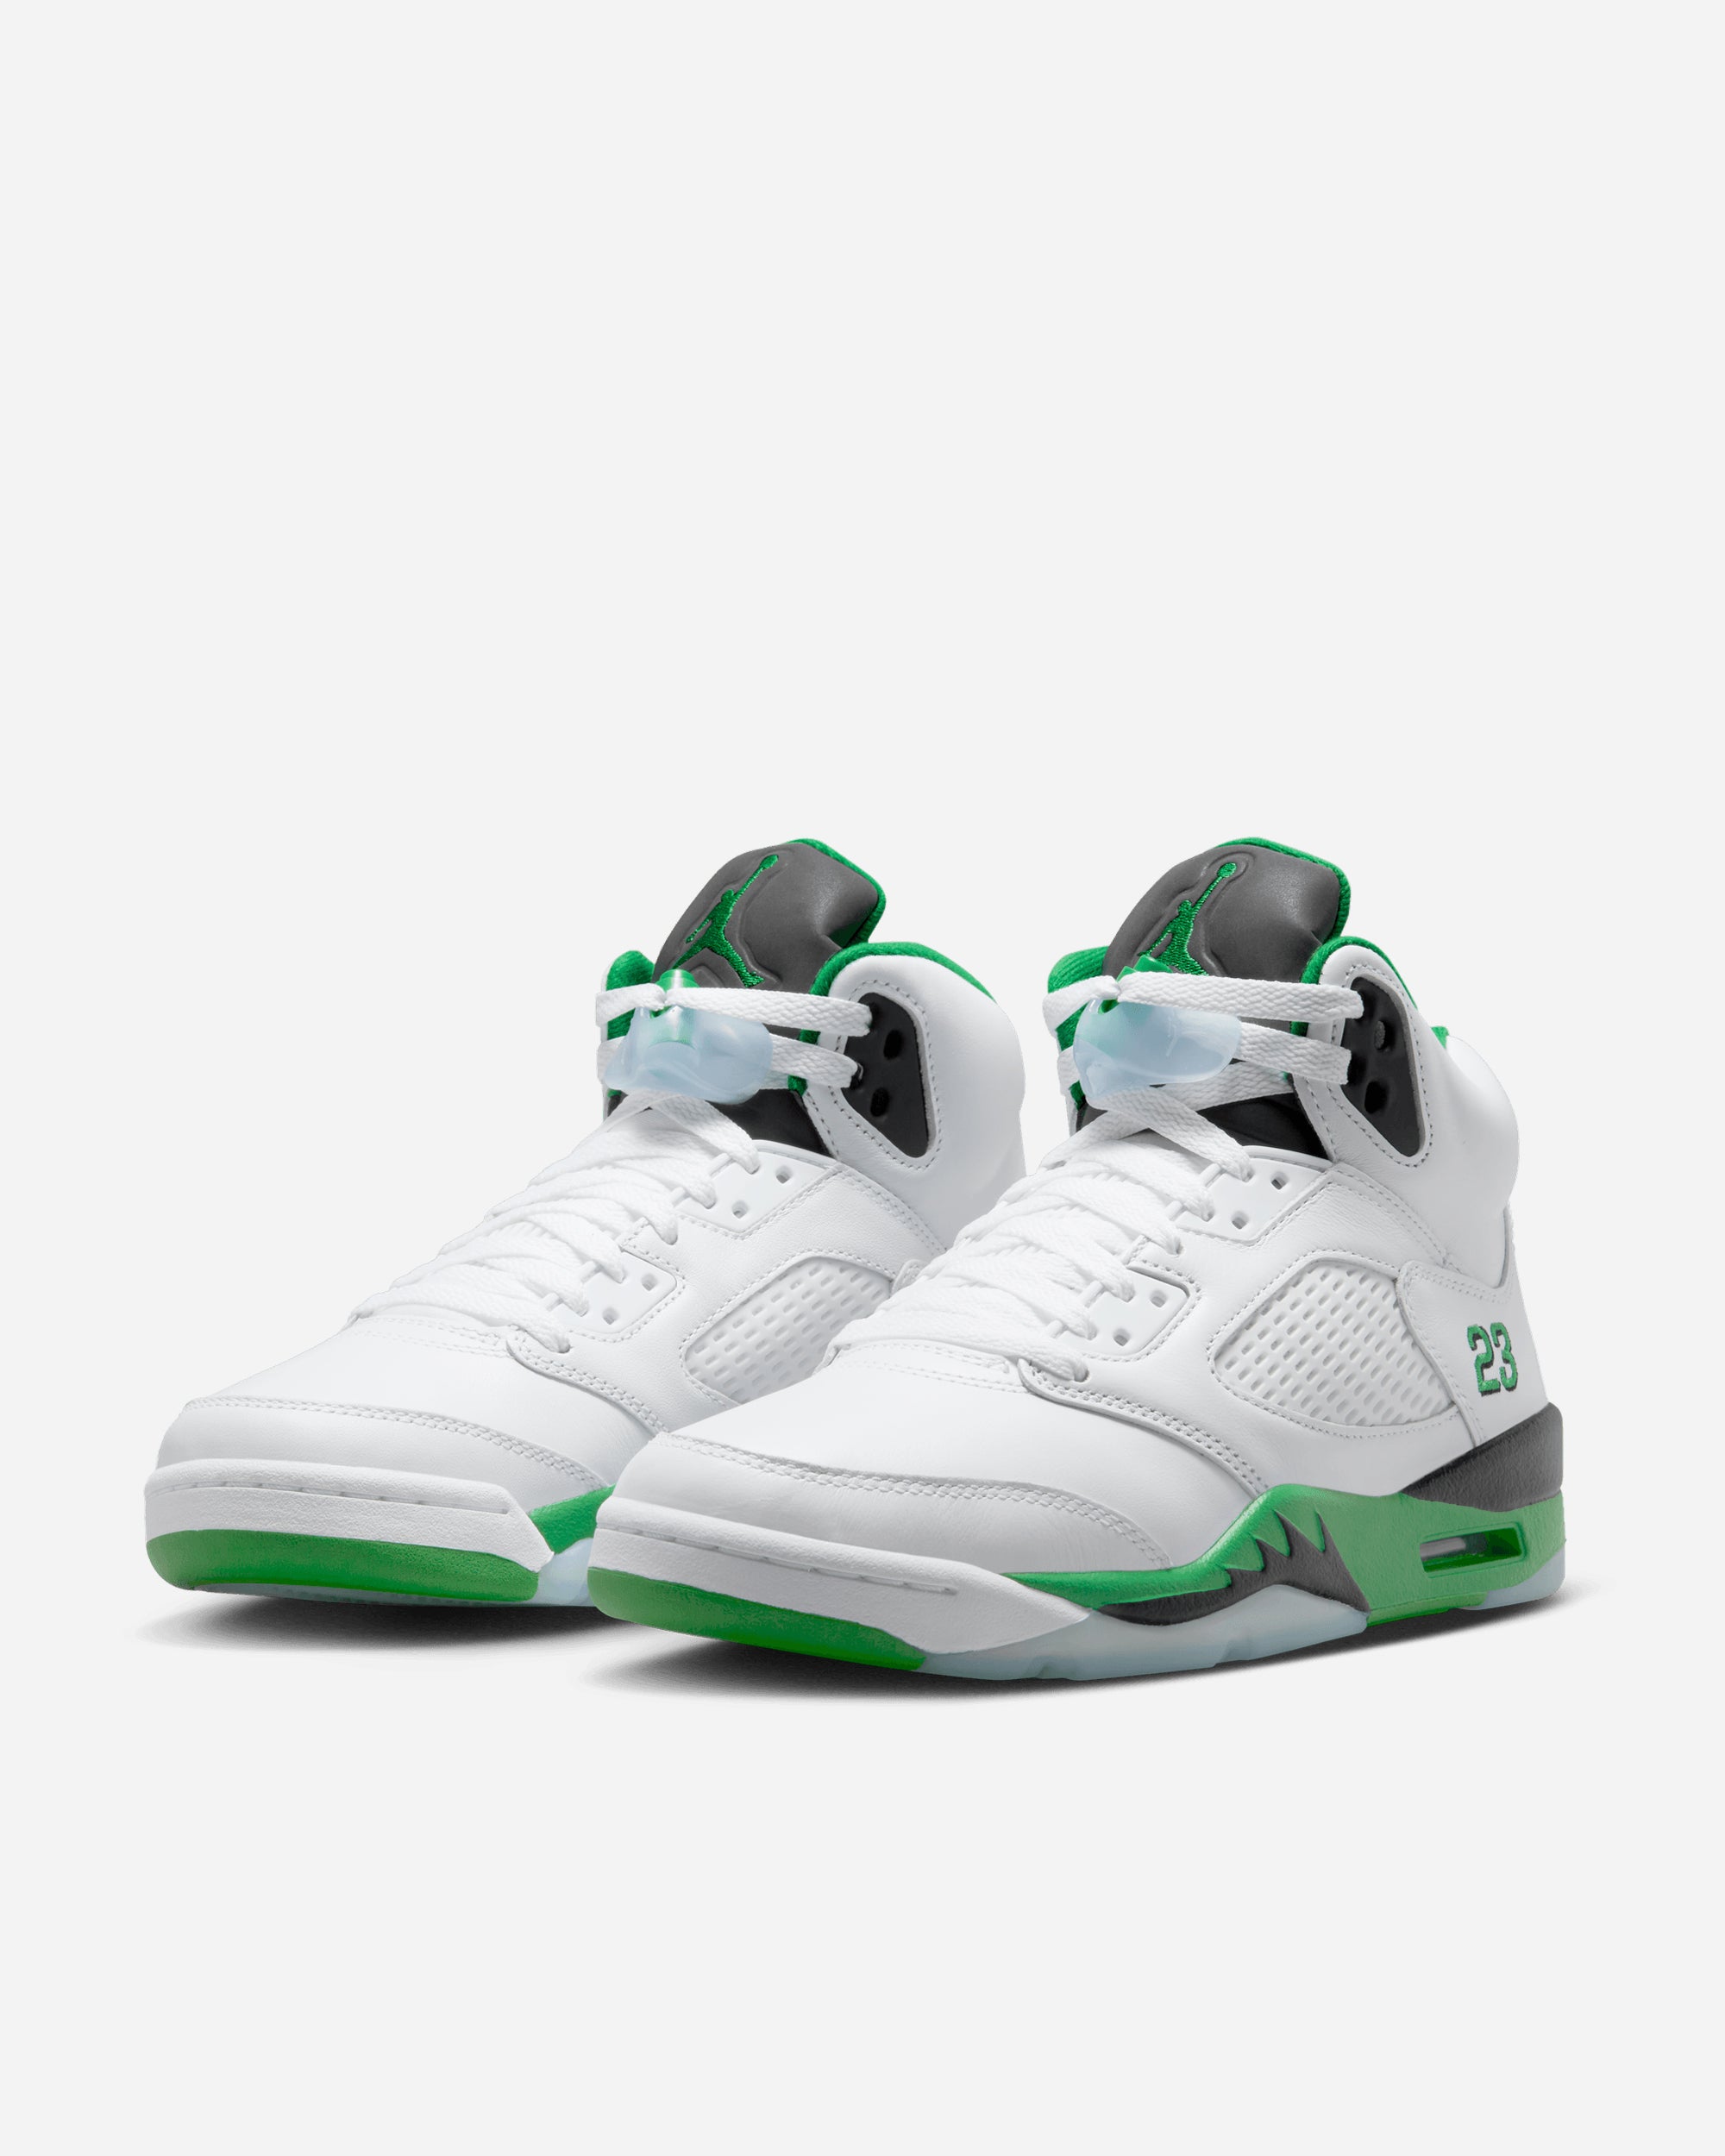 Jordan Brand Air Jordan 5 Retro 'Lucky Green' WHITE/LUCKY GREEN-BLACK DD9336-103